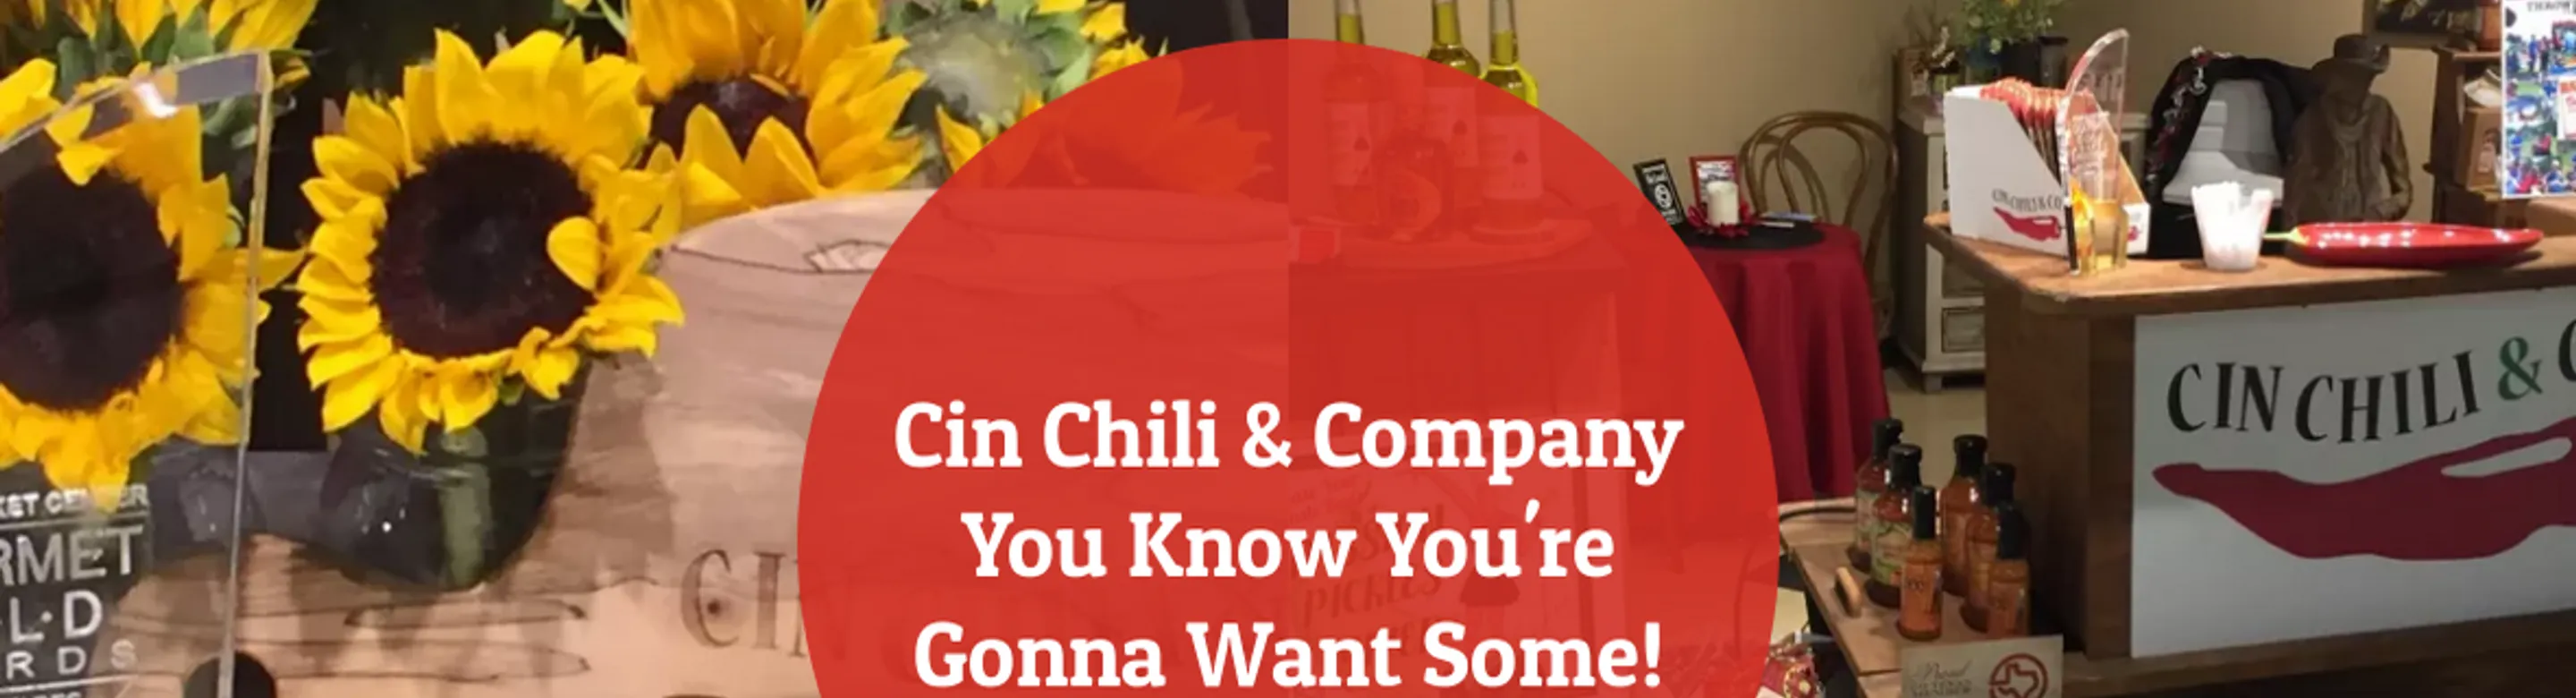 Cin Chili & Company